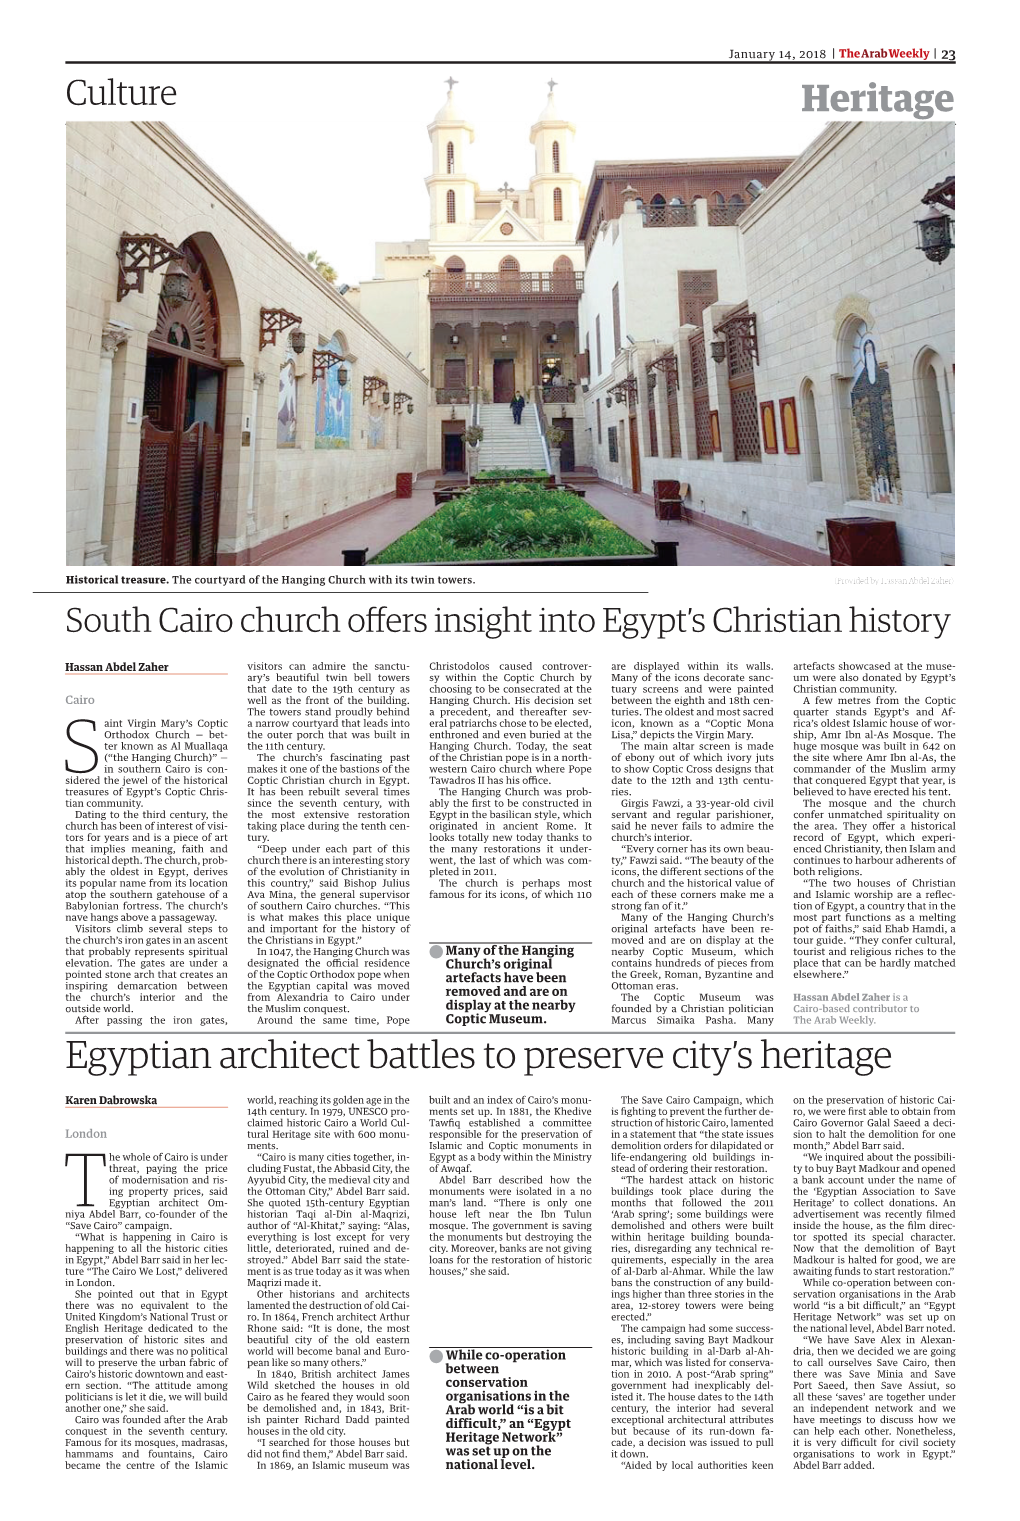 Egyptian Architect Battles to Preserve City's Heritage